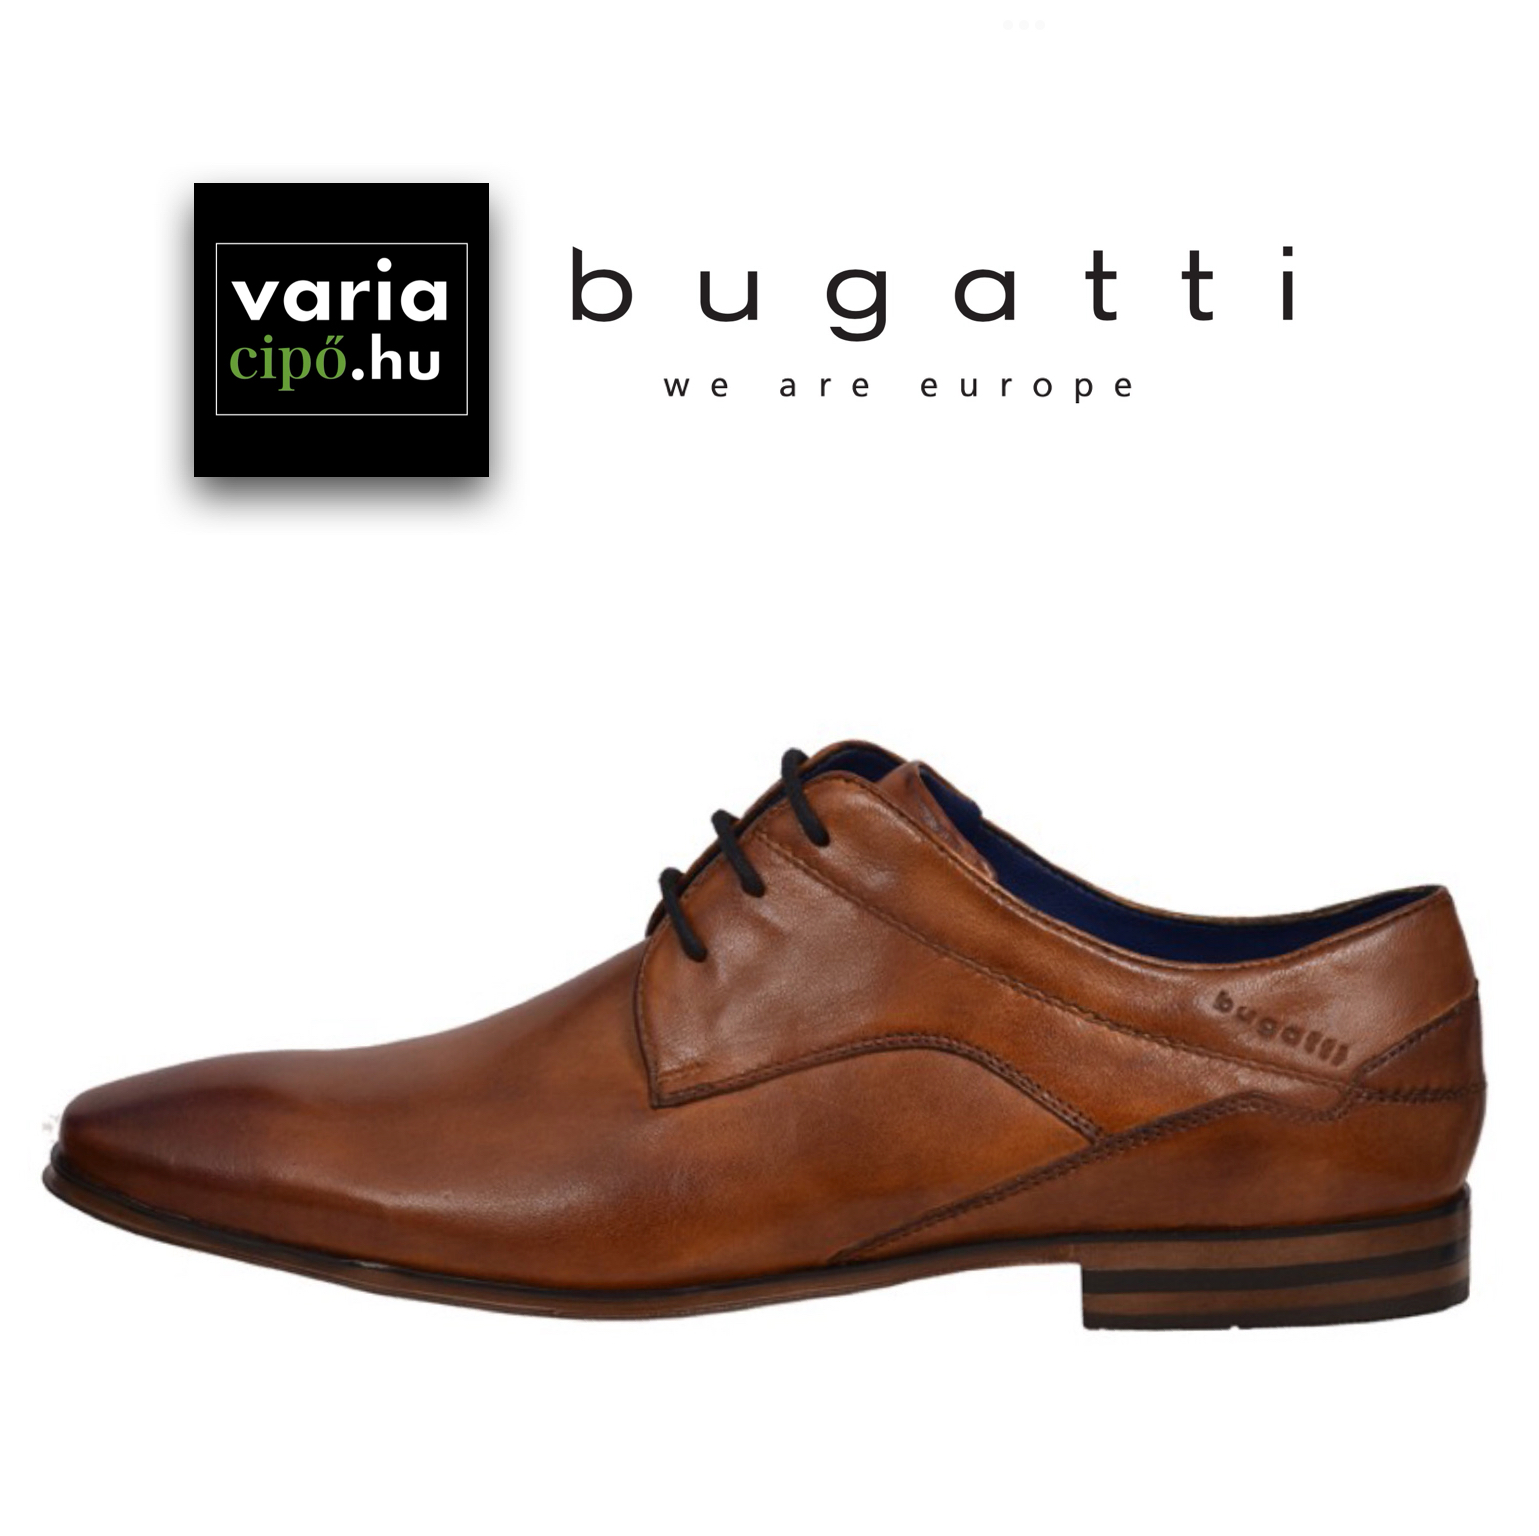 Bugatti barna alkalmi cipő, 311-42017-4100 6300 cognac